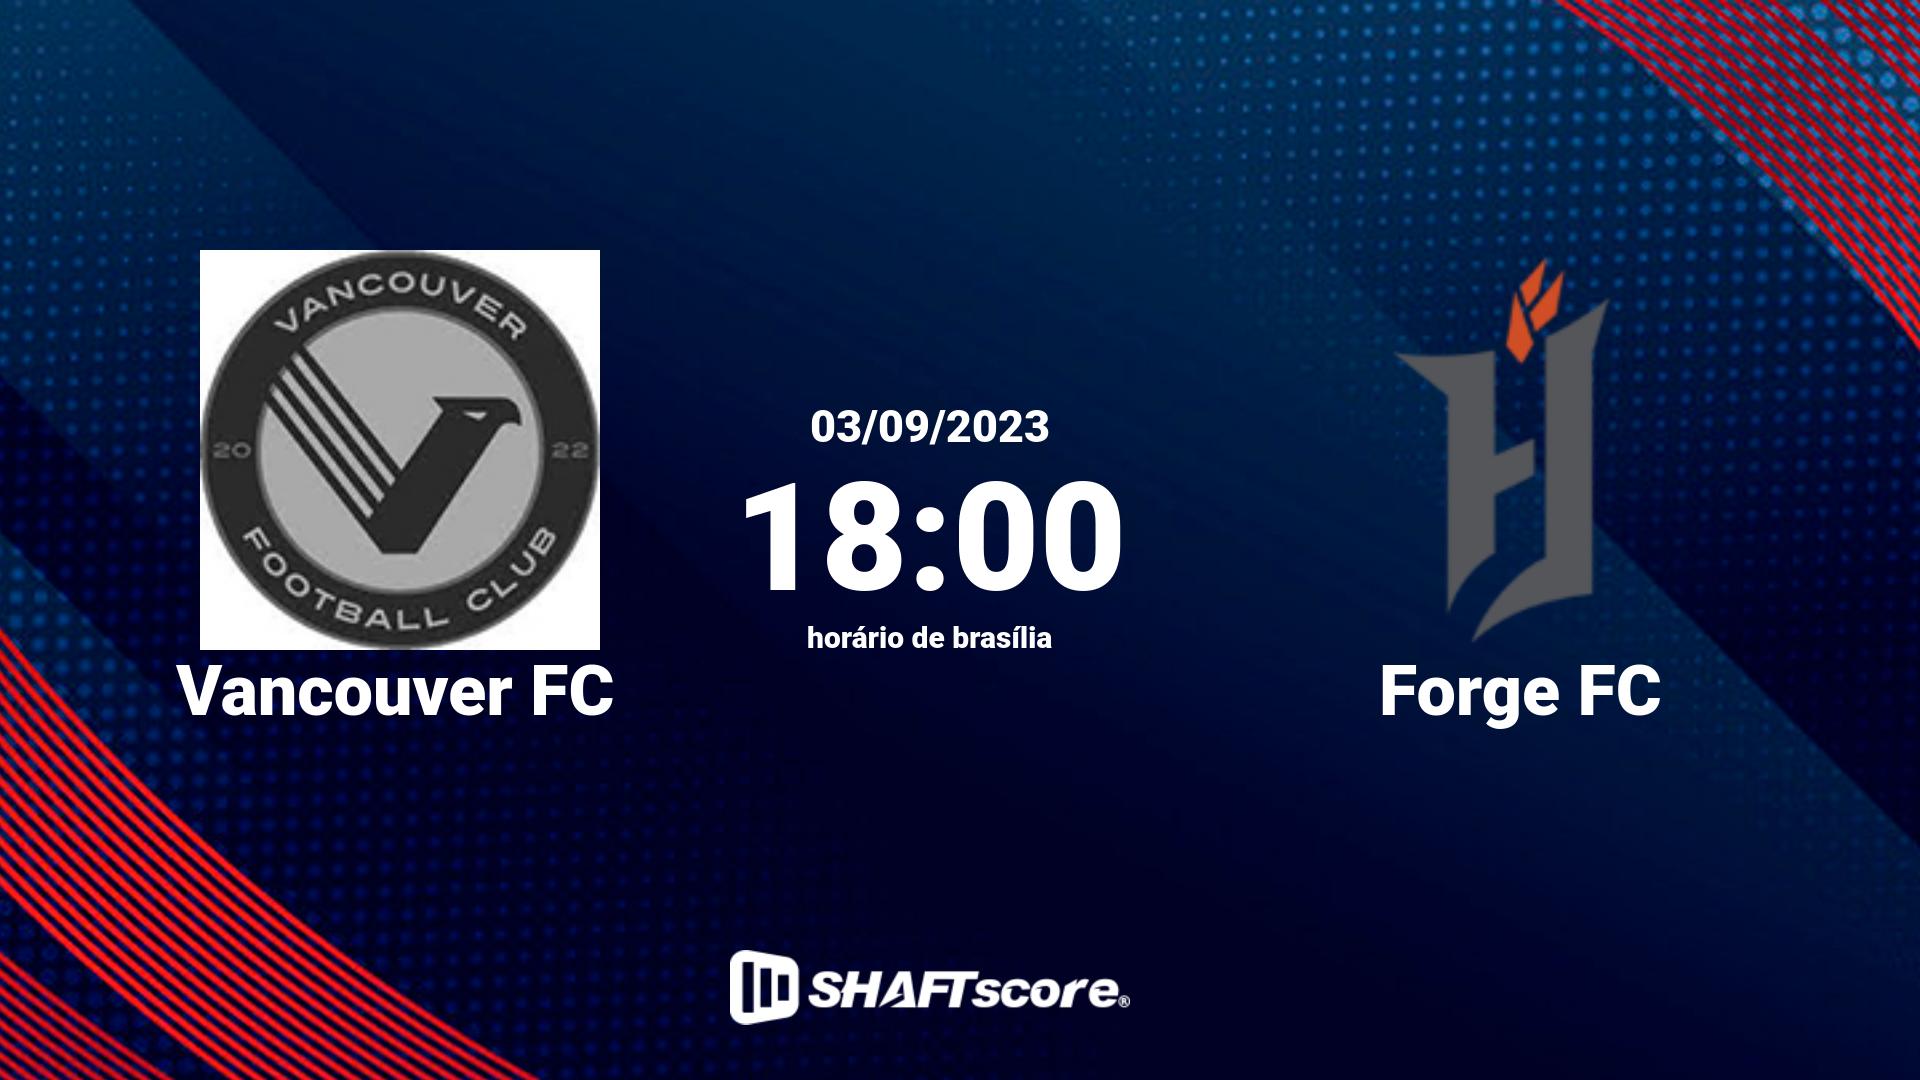 Estatísticas do jogo Vancouver FC vs Forge FC 03.09 18:00